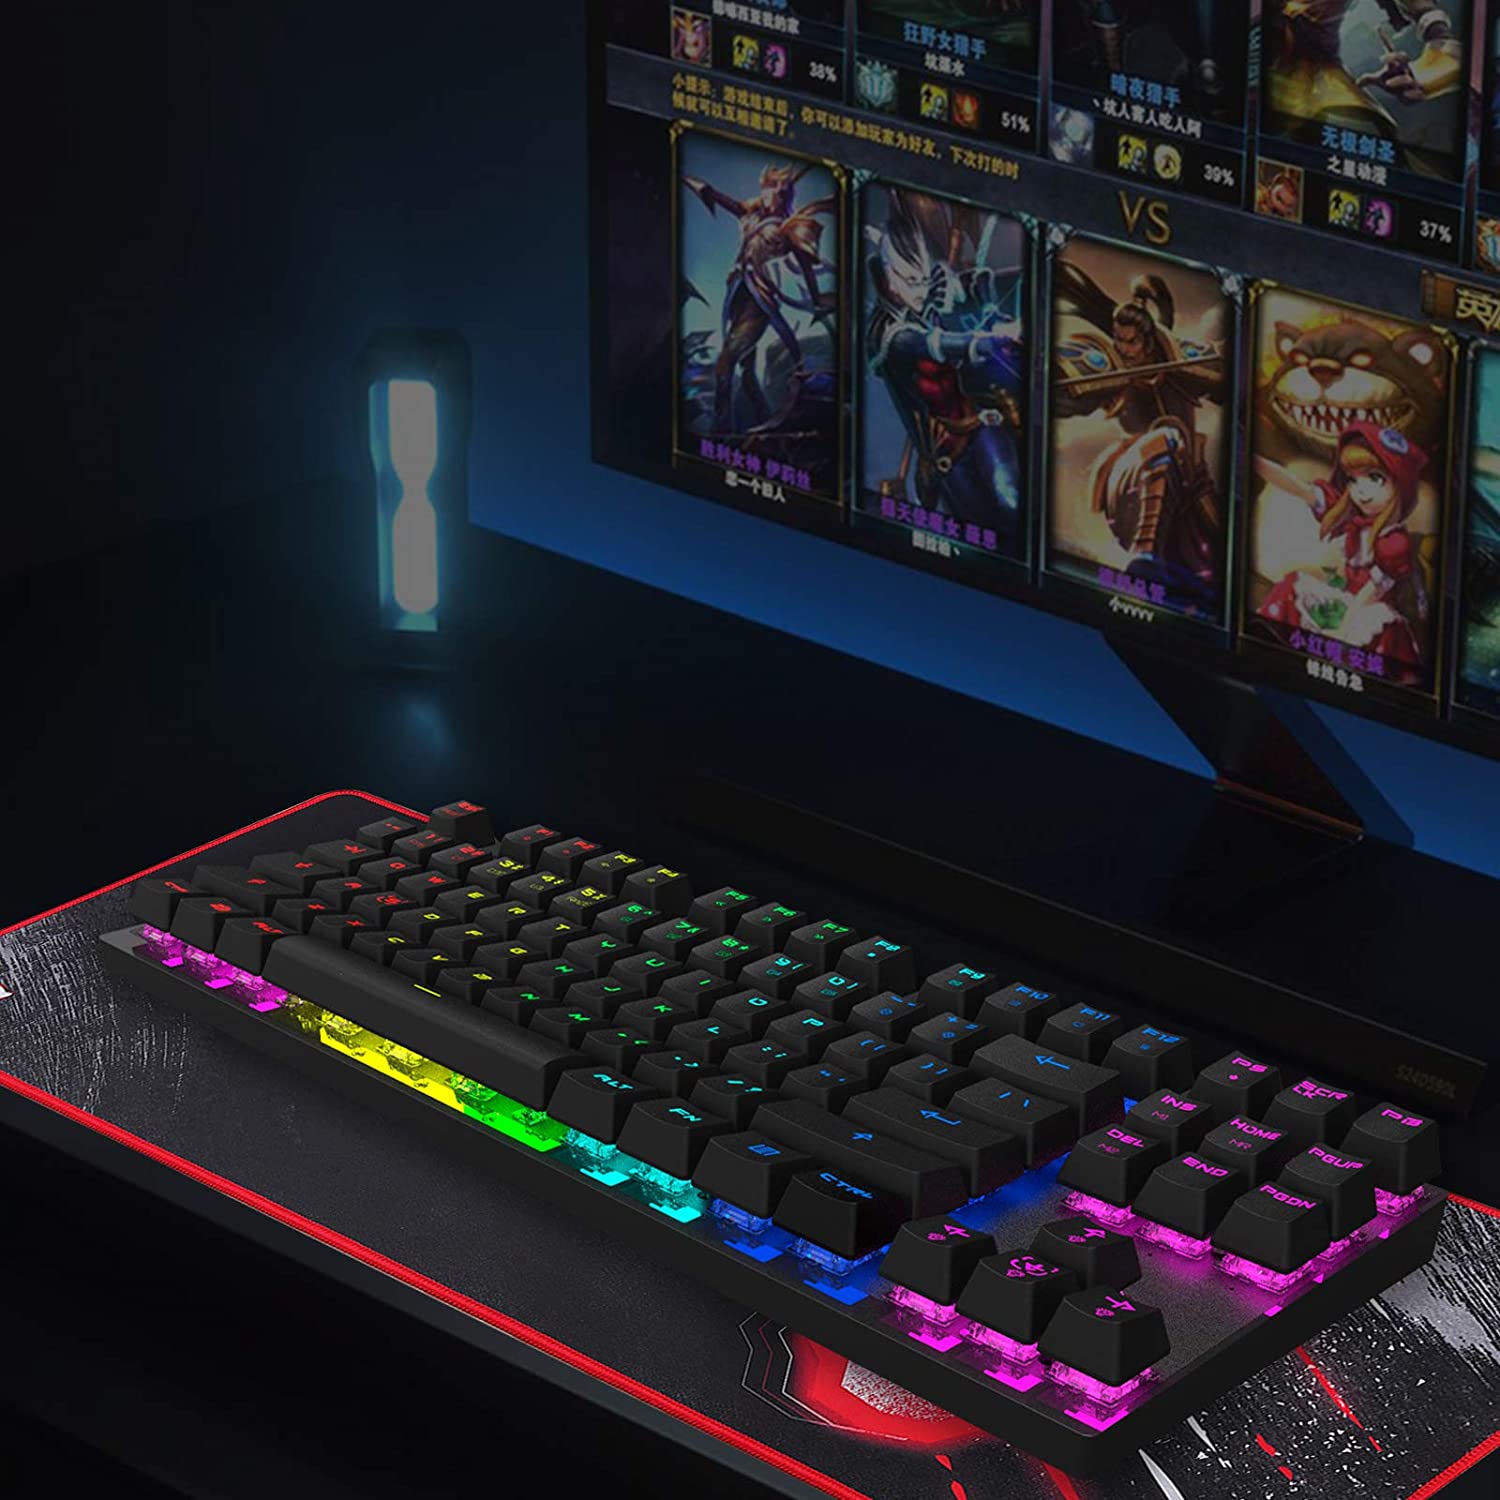 MOTOSPEED CK82 Gaming Mechanical Keyboard Customizable RGB Backlight - e4cents